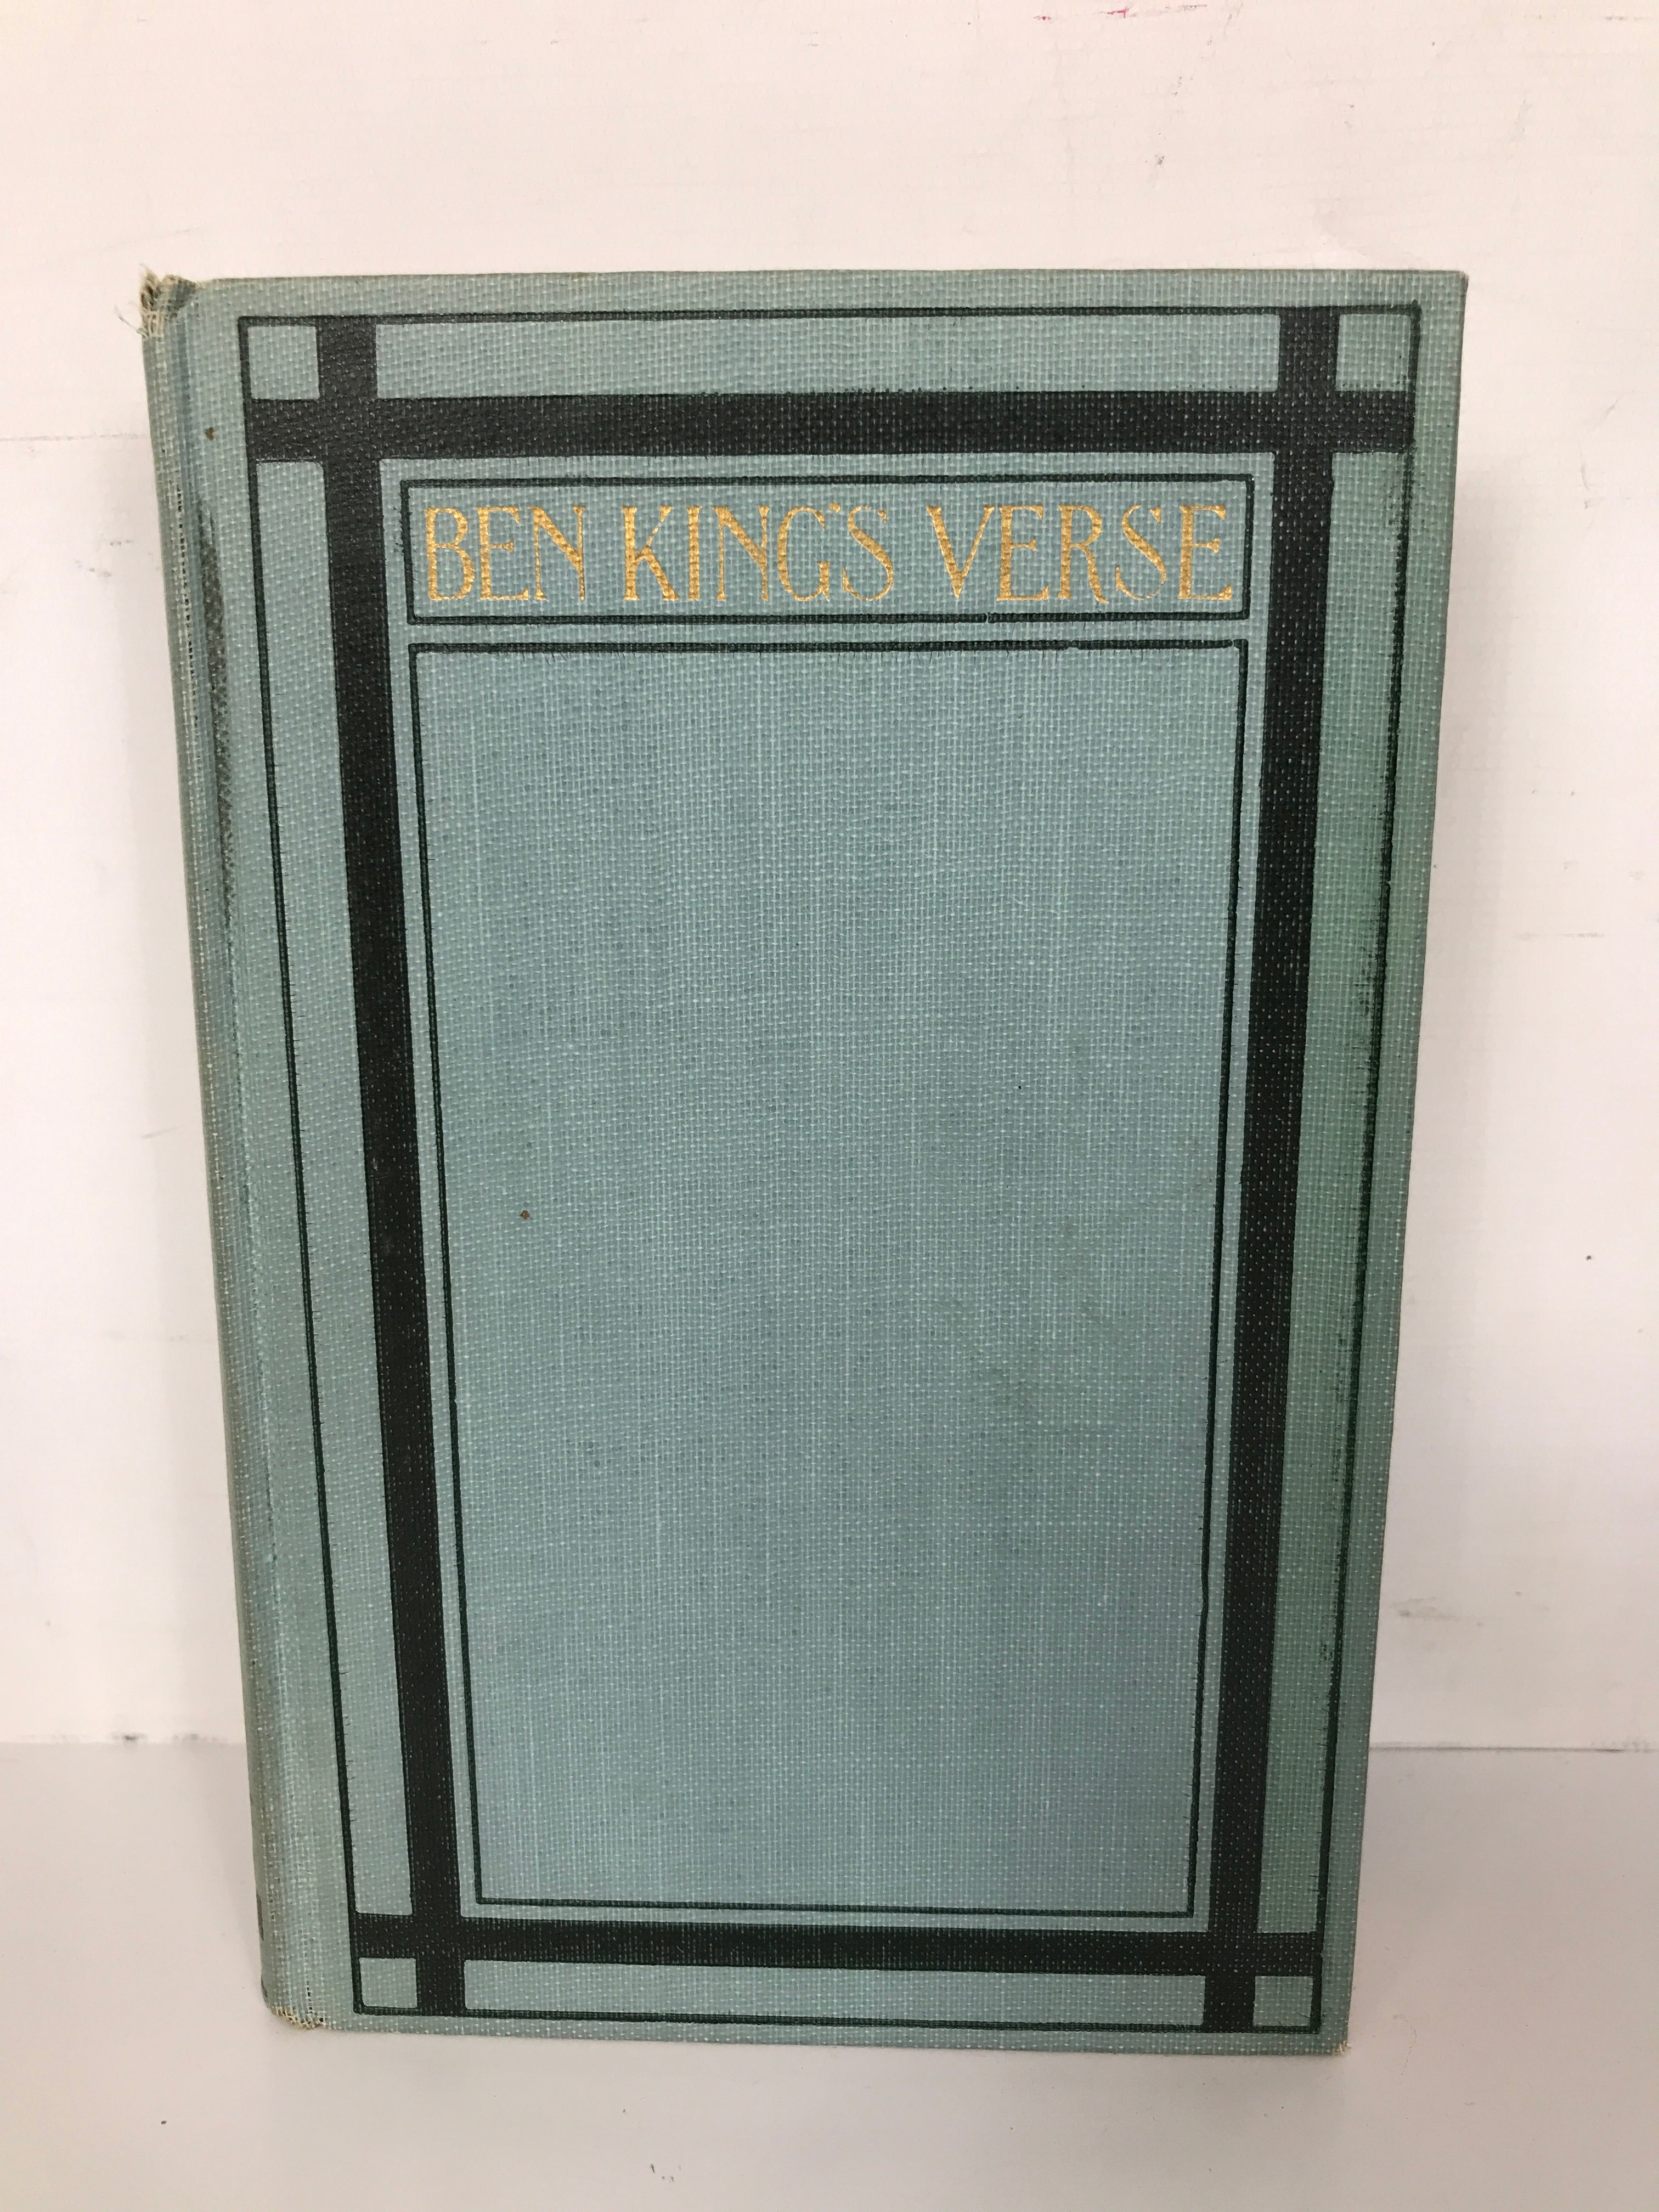 Ben King's Verse by Nixon Waterman 1898 Second Edition HC